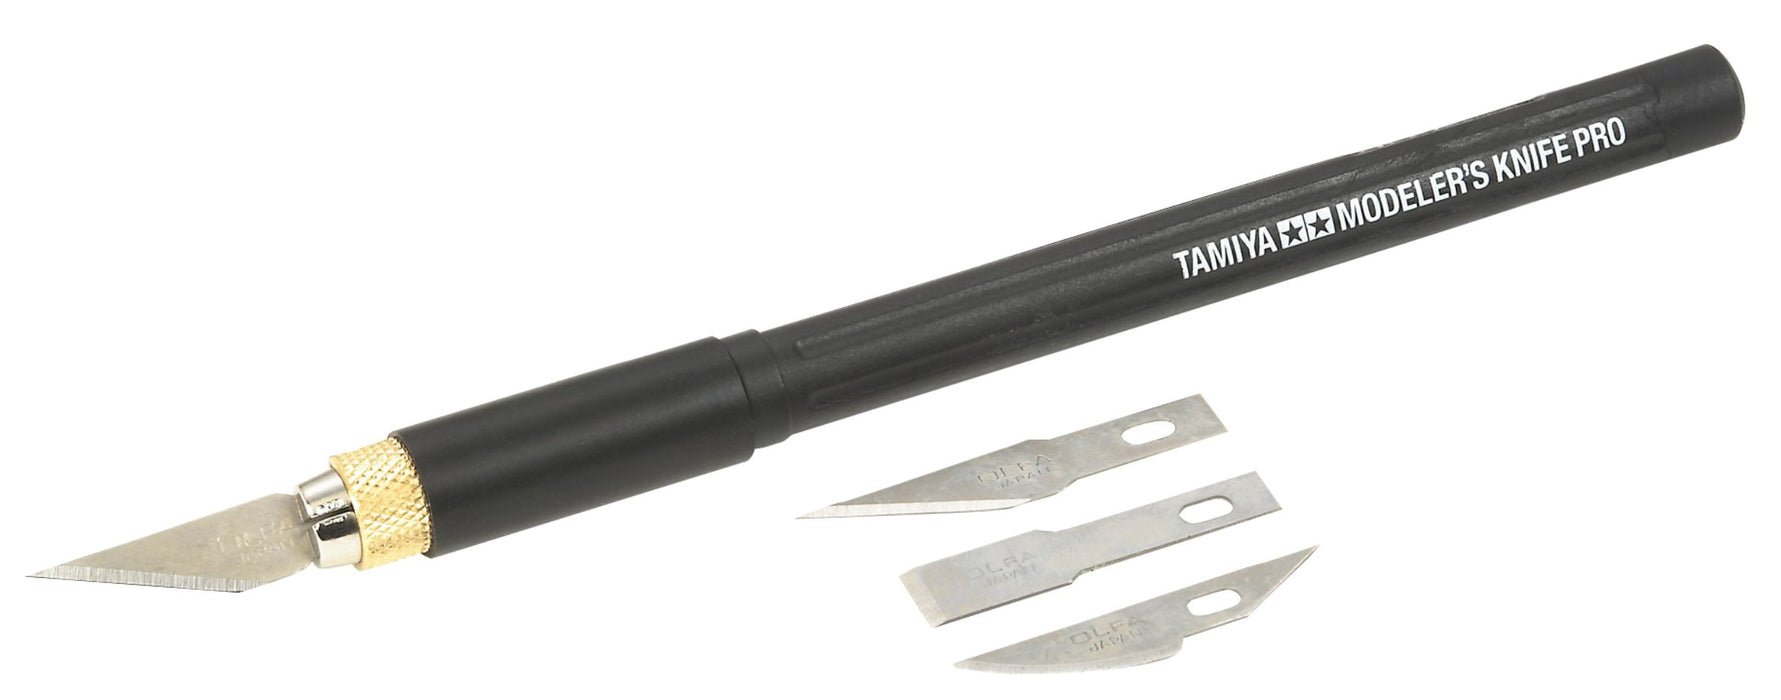 Tamiya 74098 Modeler's Knife Pro Plastic Model Tool